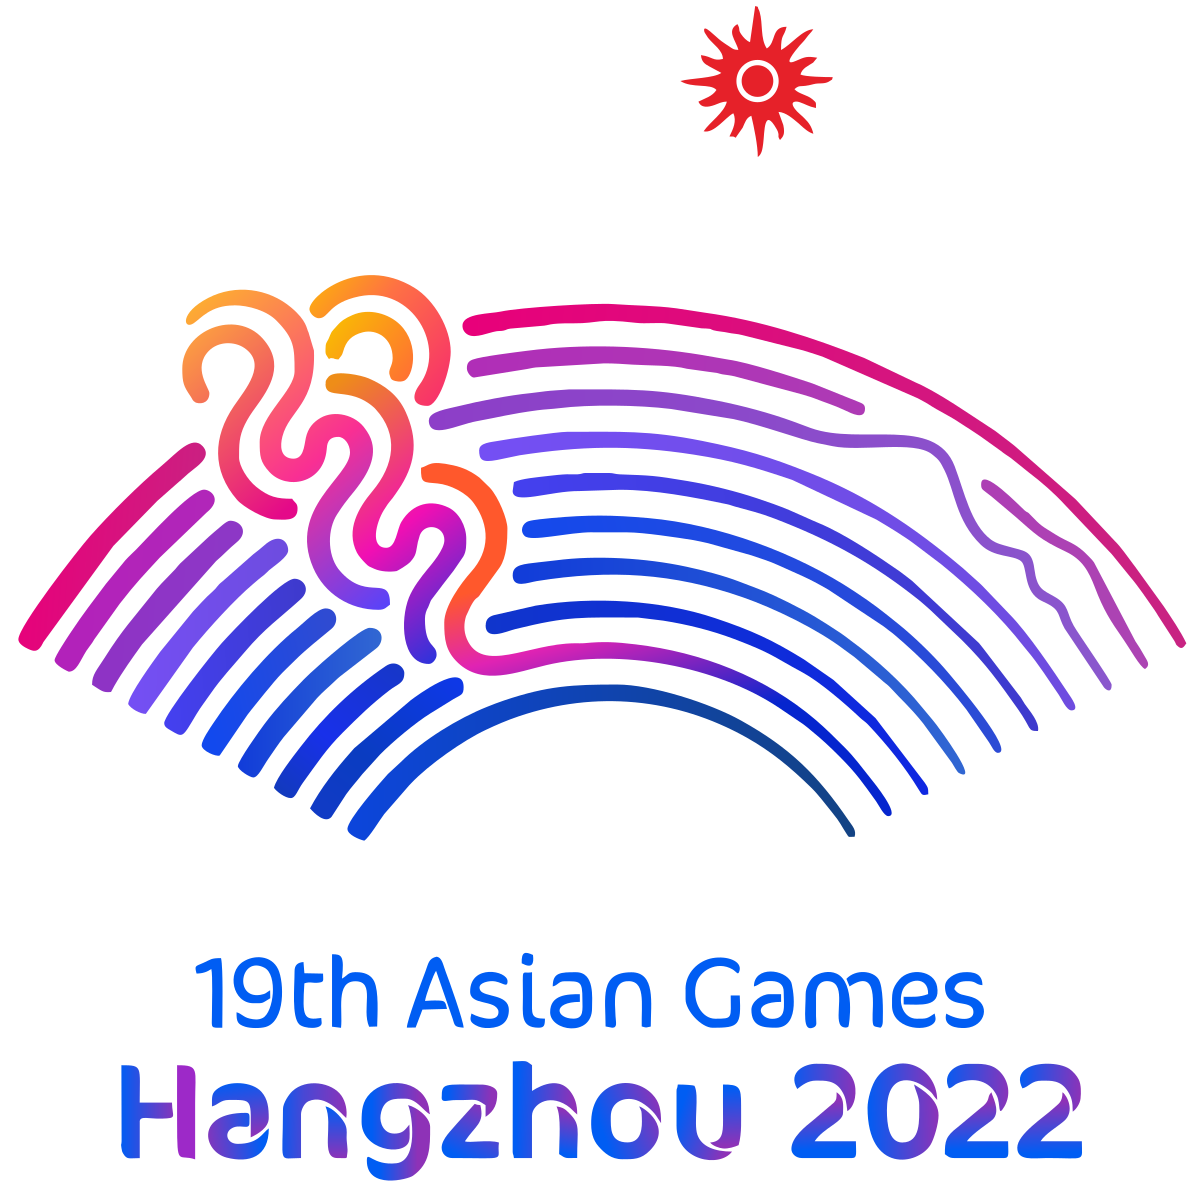 Hangzhou 2022 launches volunteer recruitment programme for Asian Games